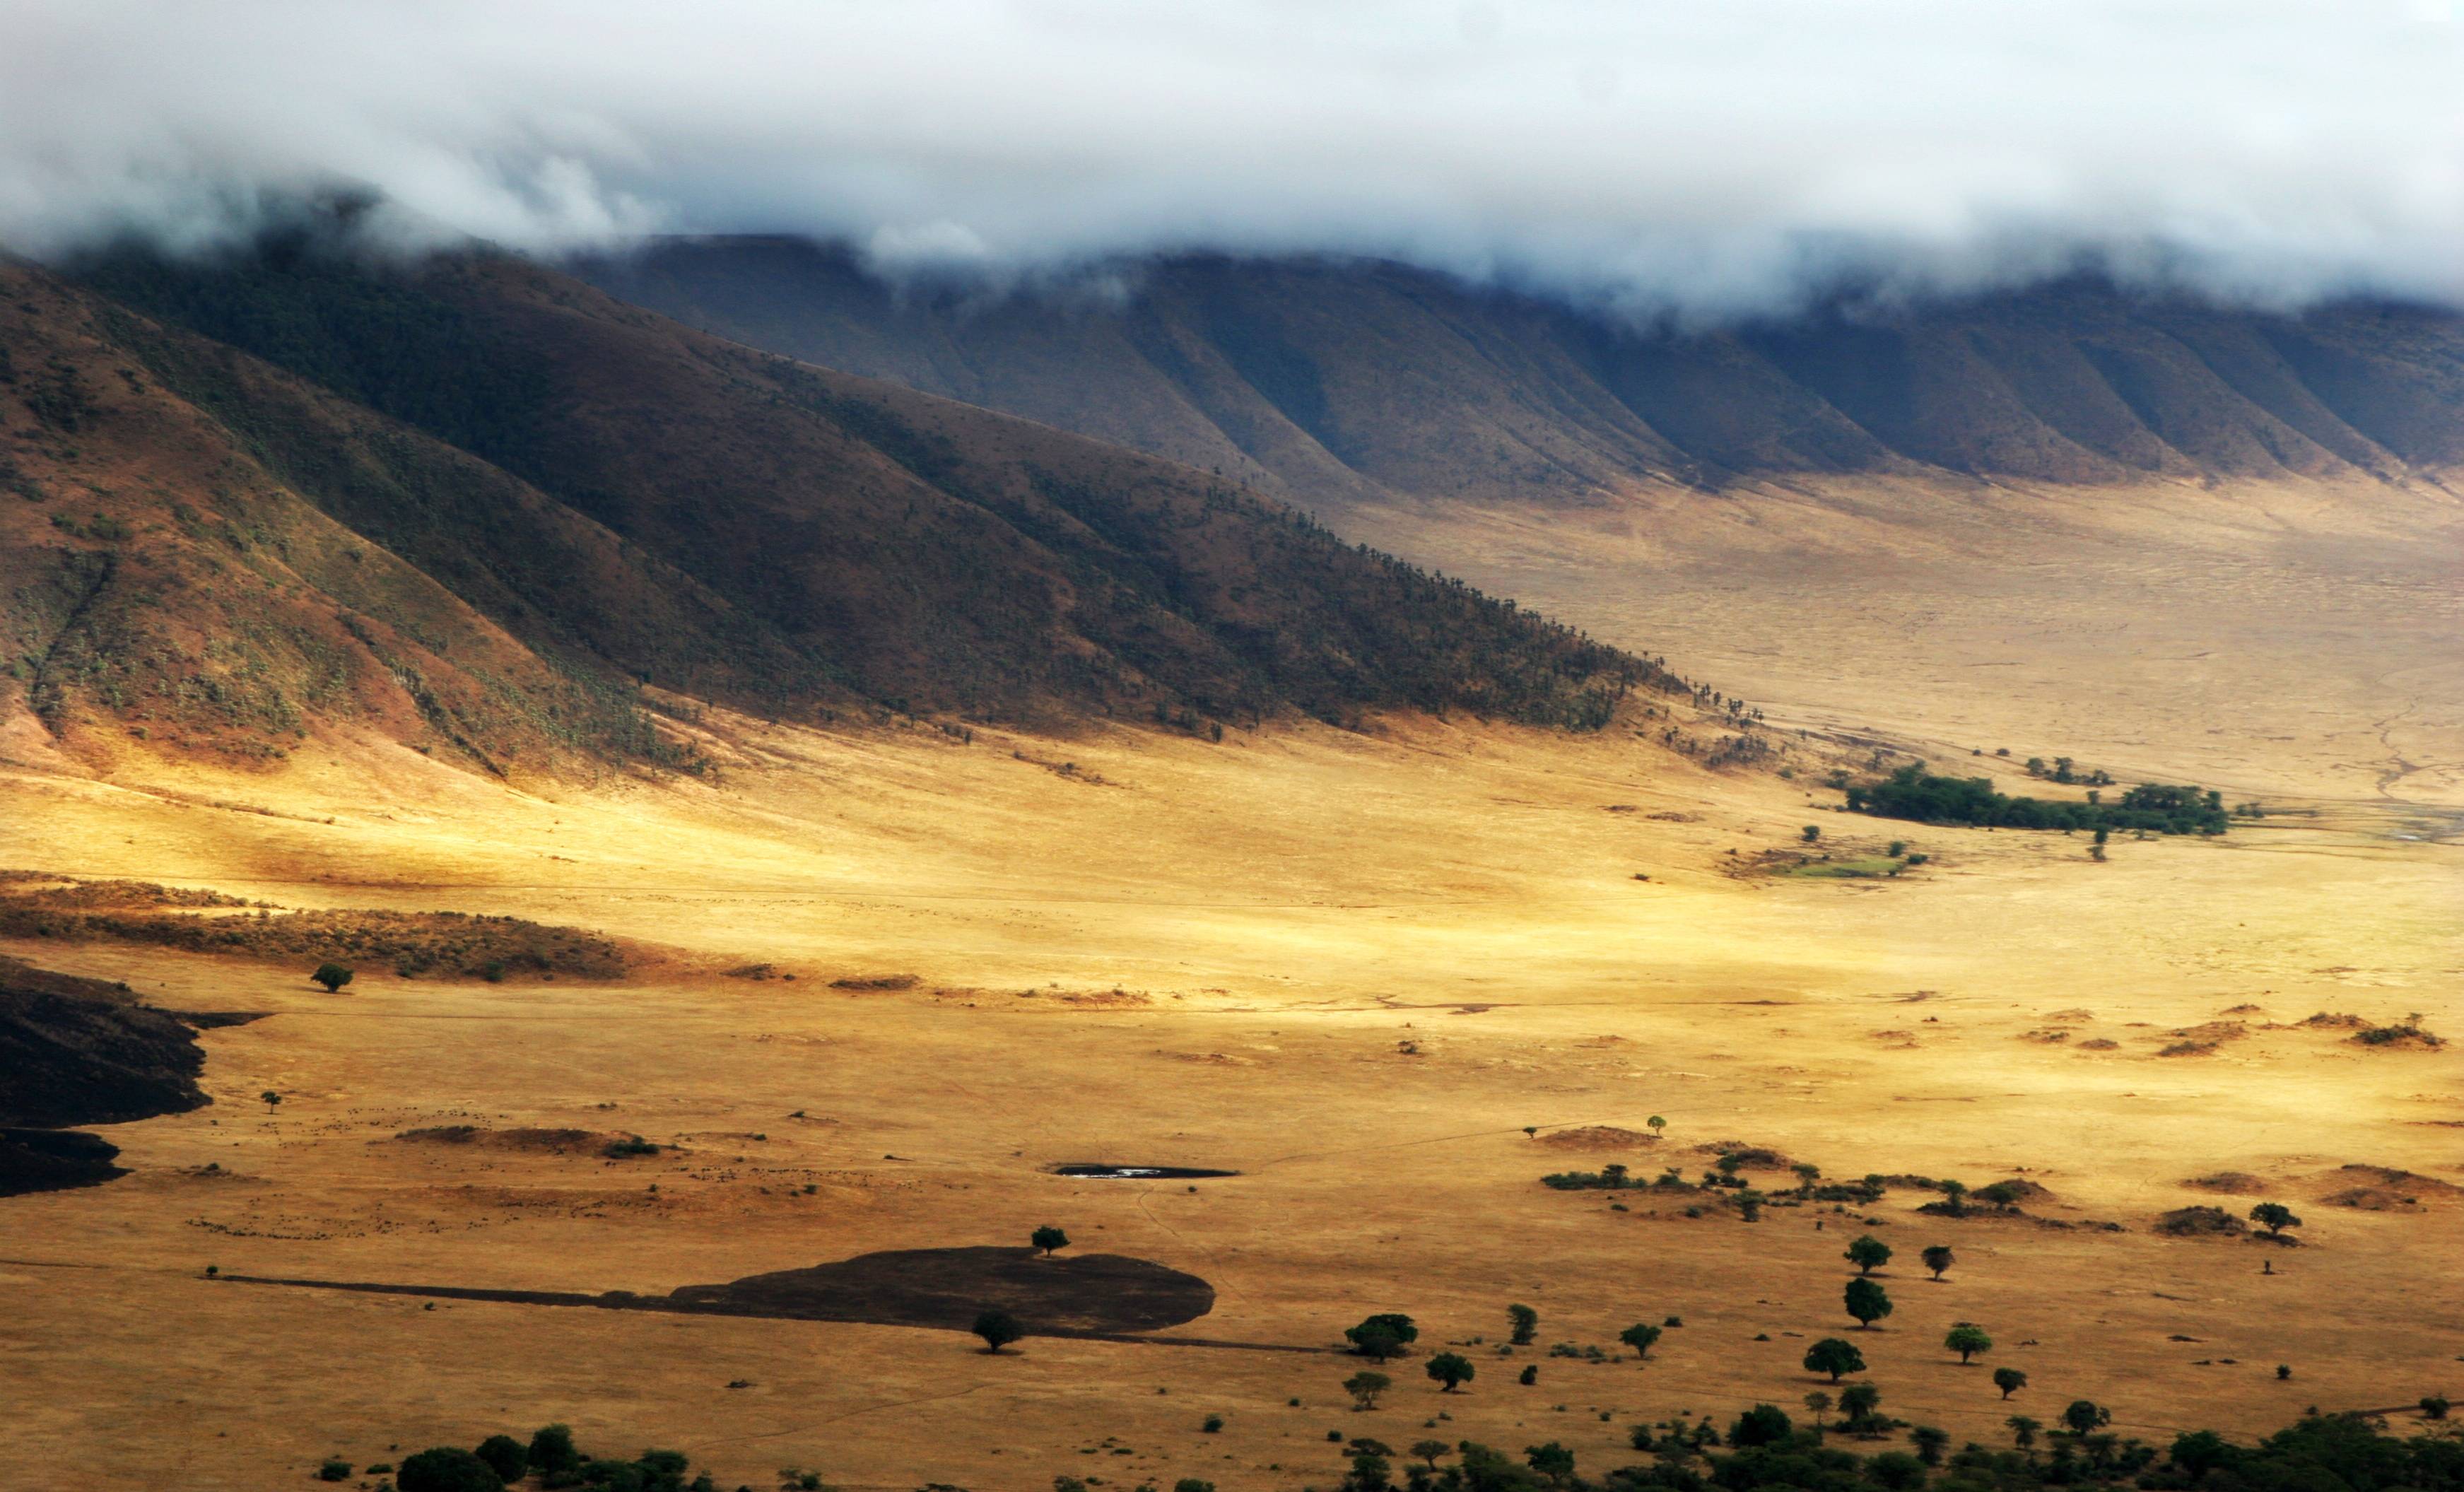 Safari dans le cratère du Ngorongoro